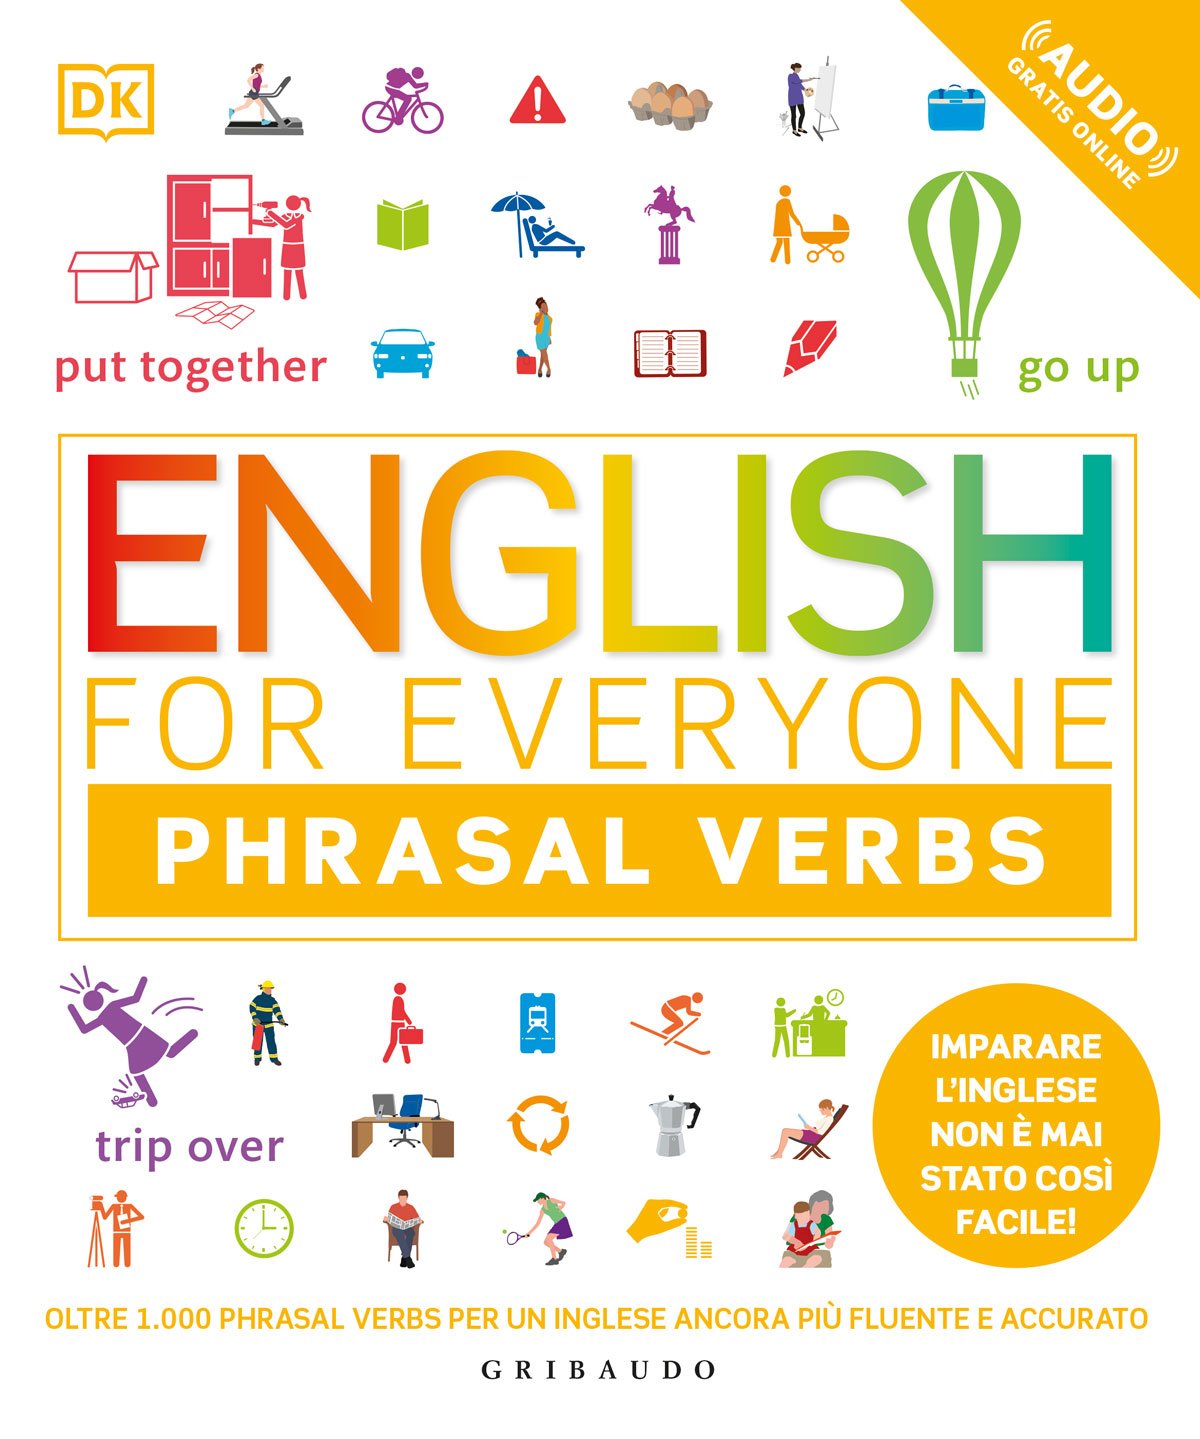 English for everyone - English Phrasal verbs